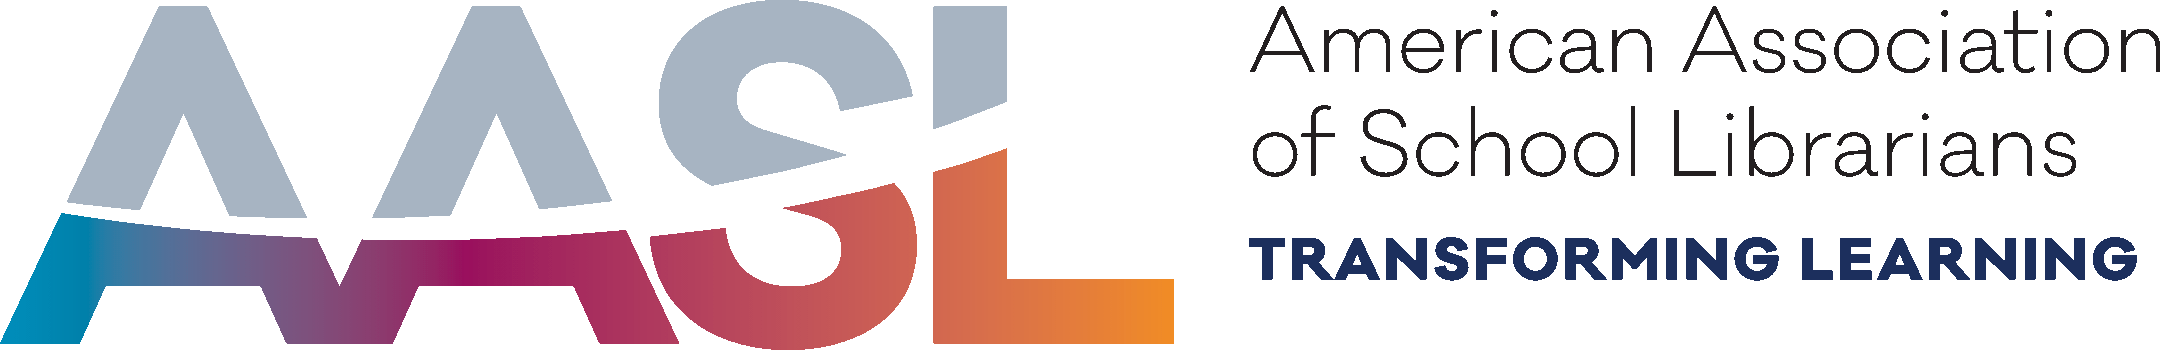 Librarian Logo - American Association of School Librarians (AASL)